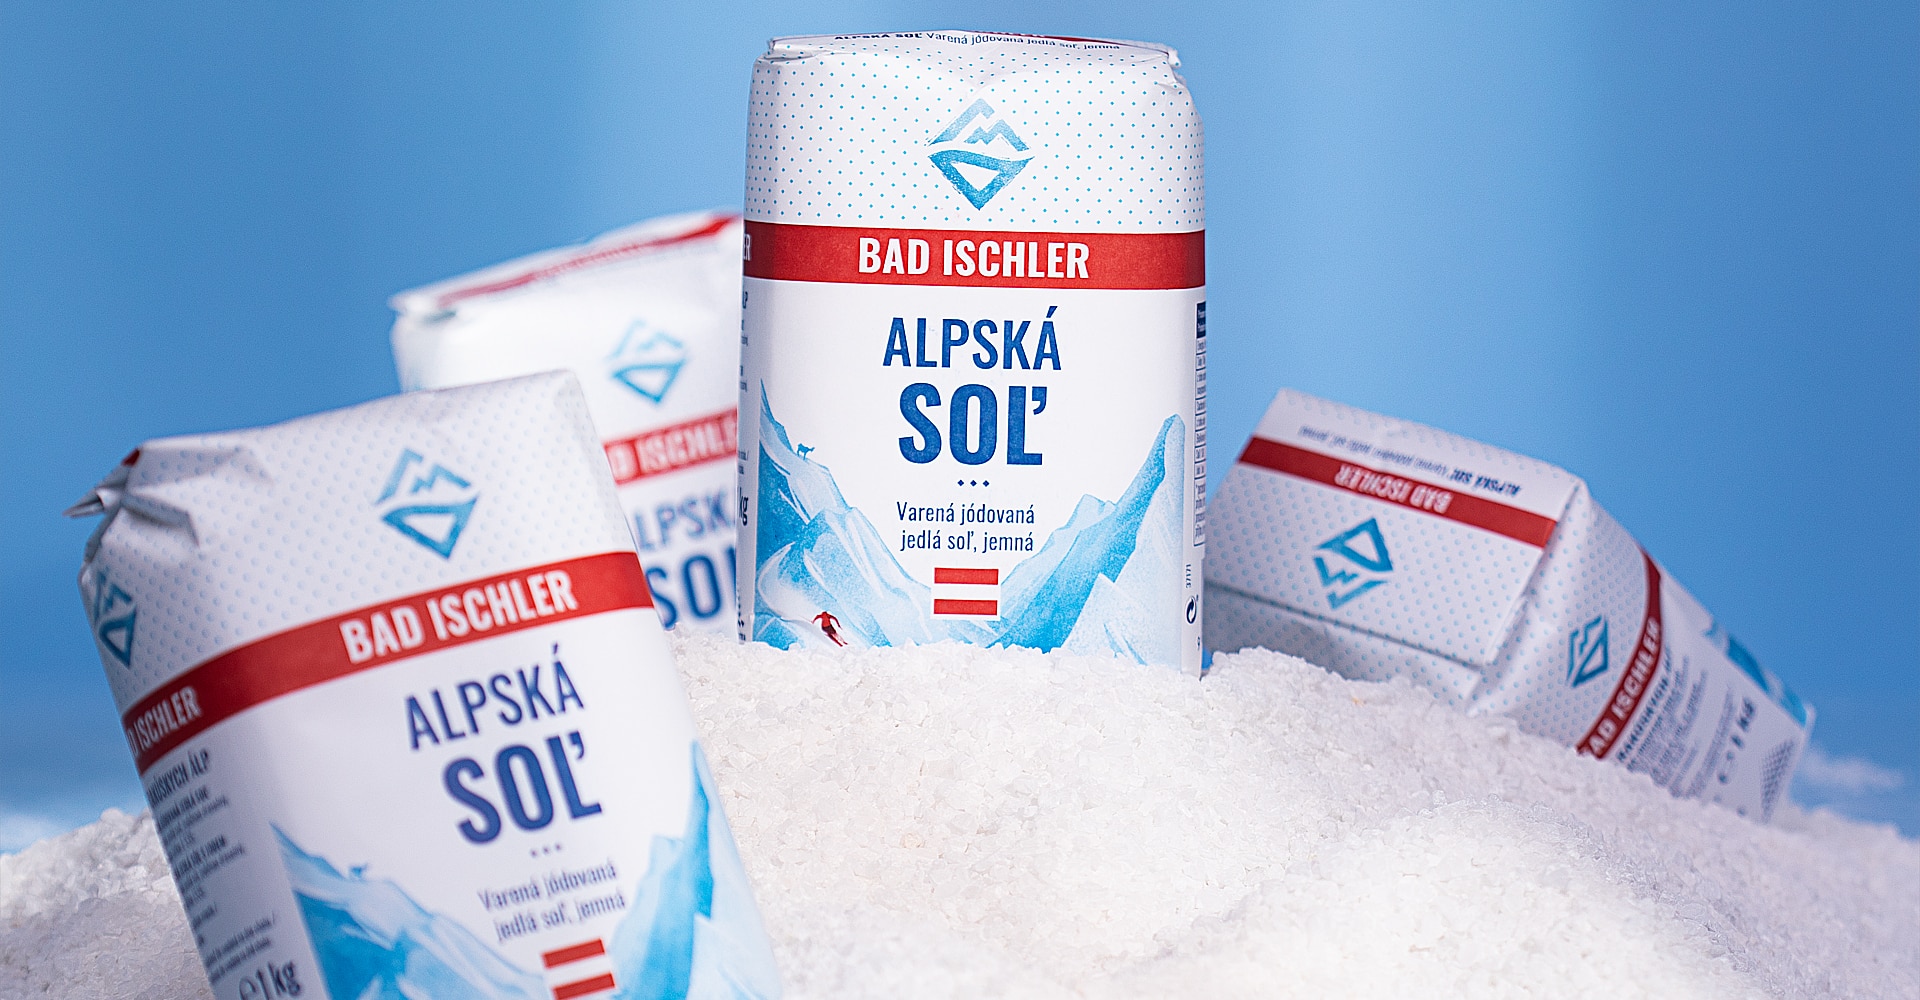 bad ischler salt packaging